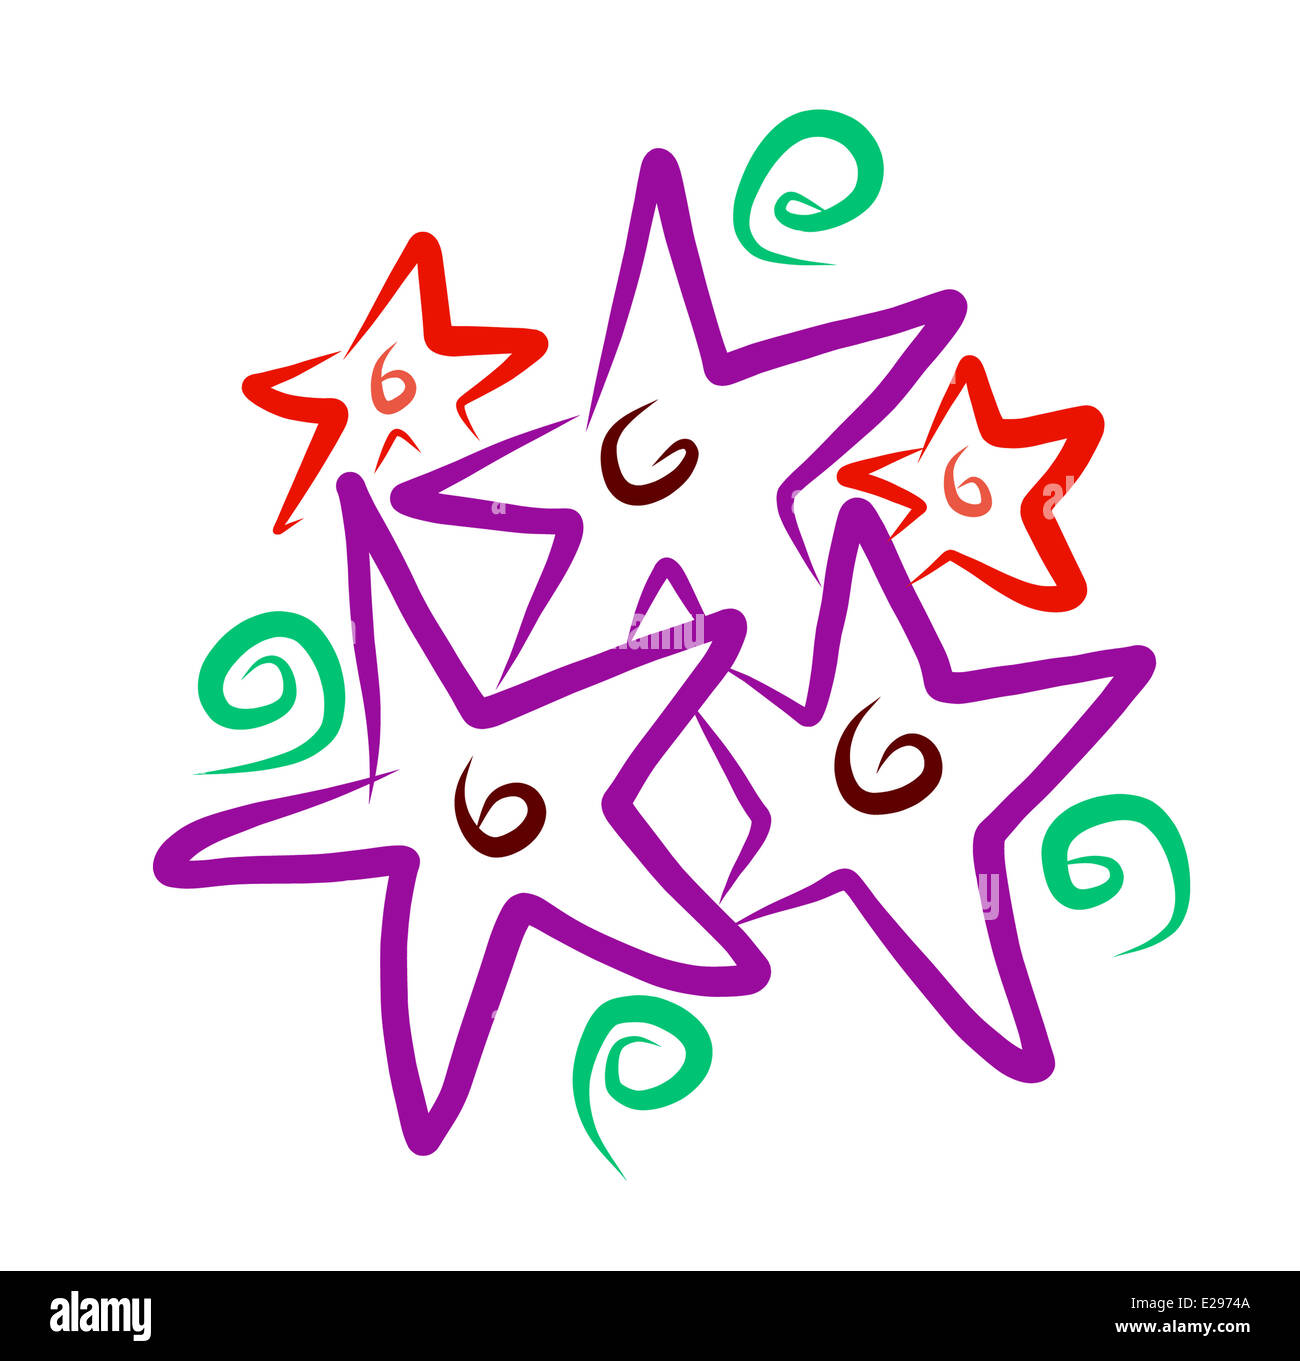 Illustration of stars and swirls Stock Photo